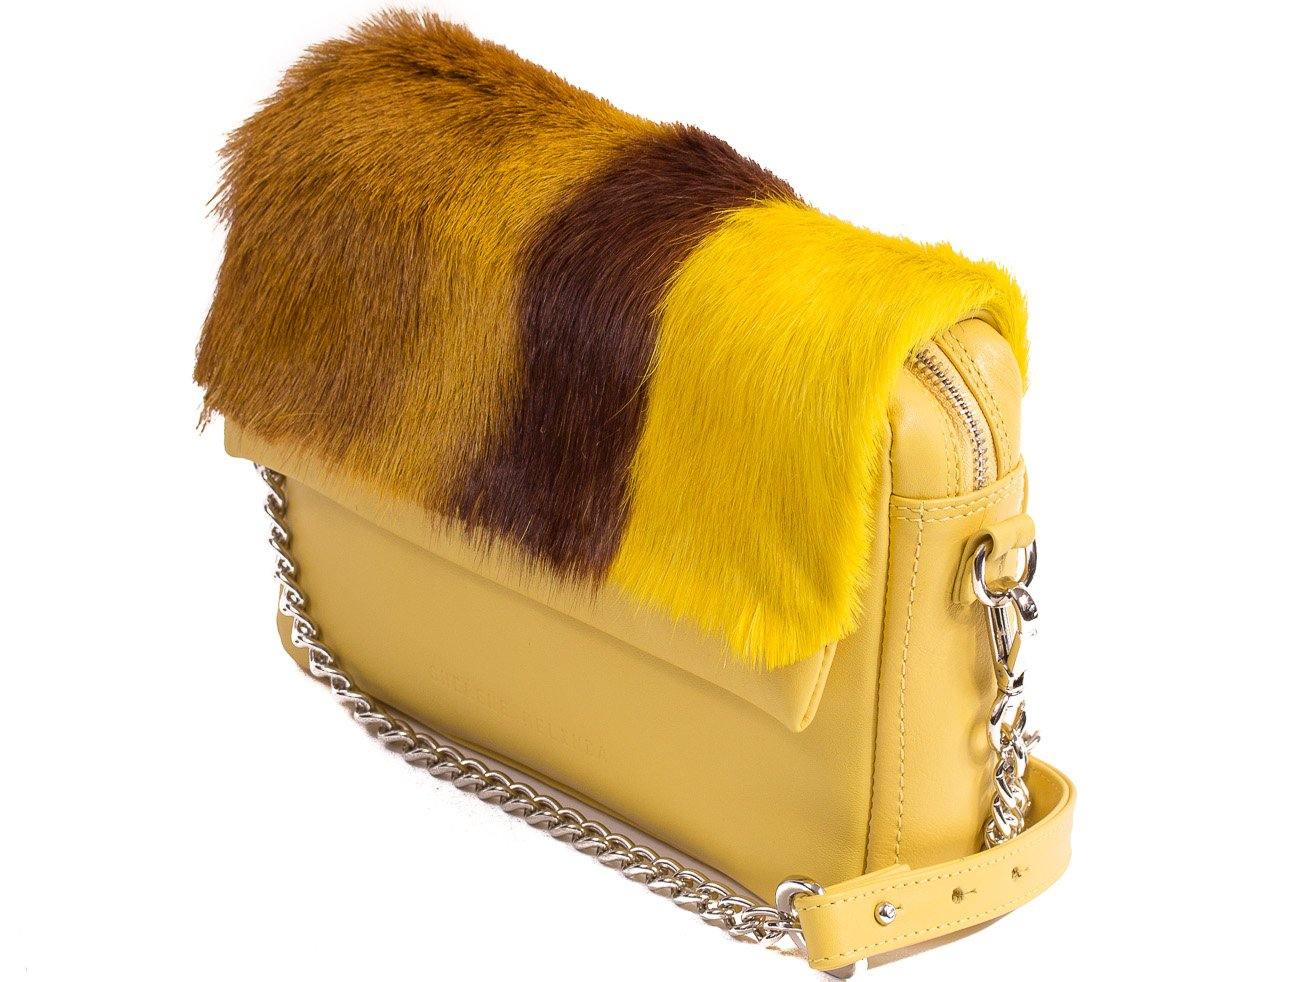 sherene melinda springbok hair-on-hide yellow leather shoulder bag Stripe side angle strap